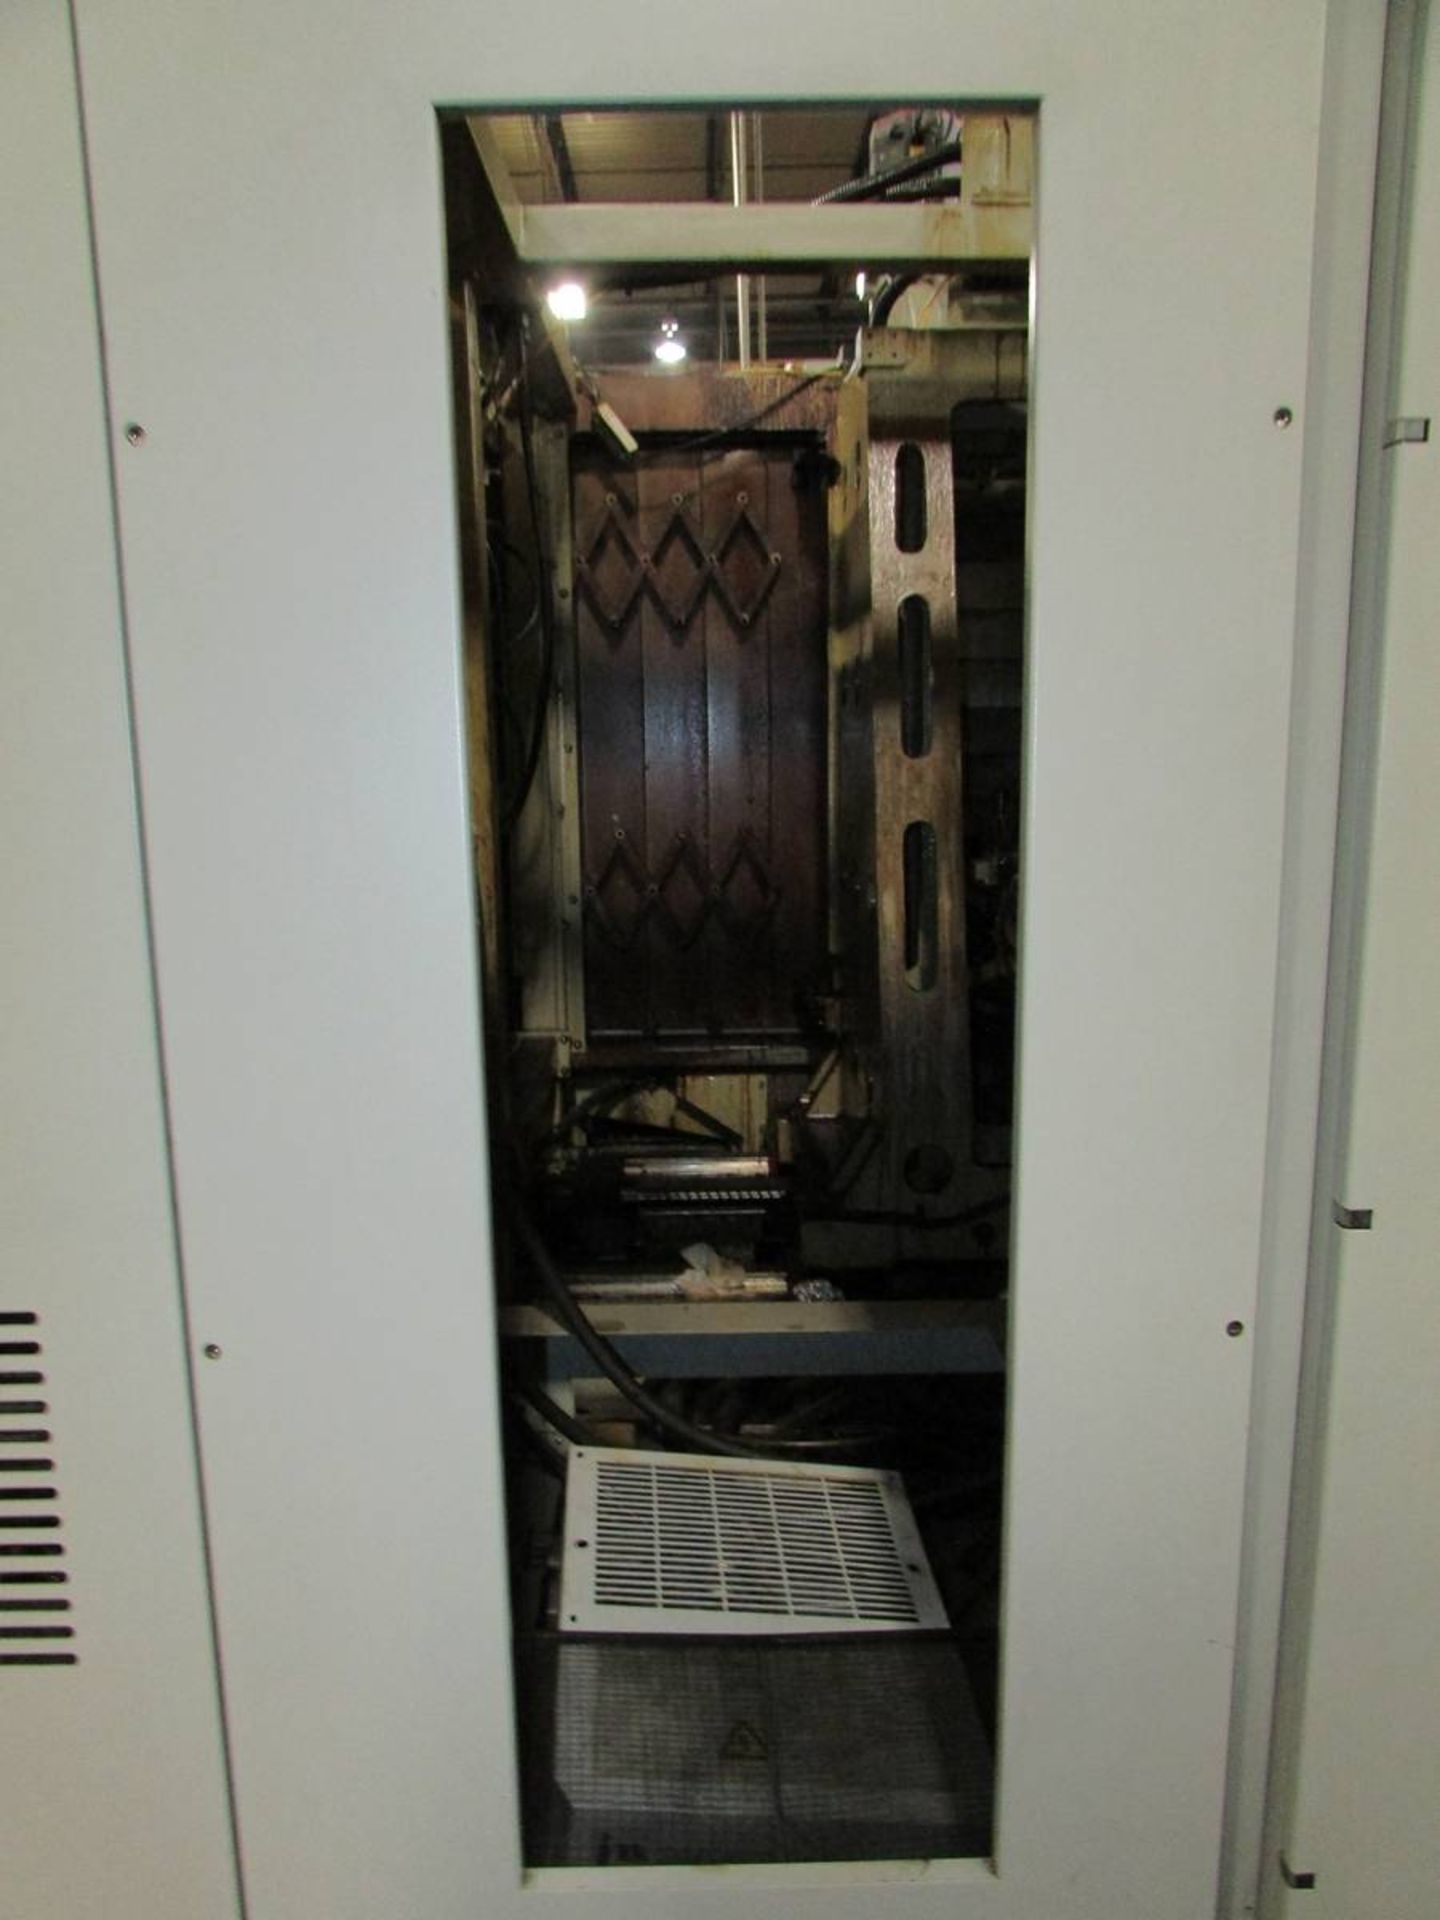 2007 Hyundia Kia Machine HS500 Horizontal 4-Axis CNC Machining Center - Image 11 of 30